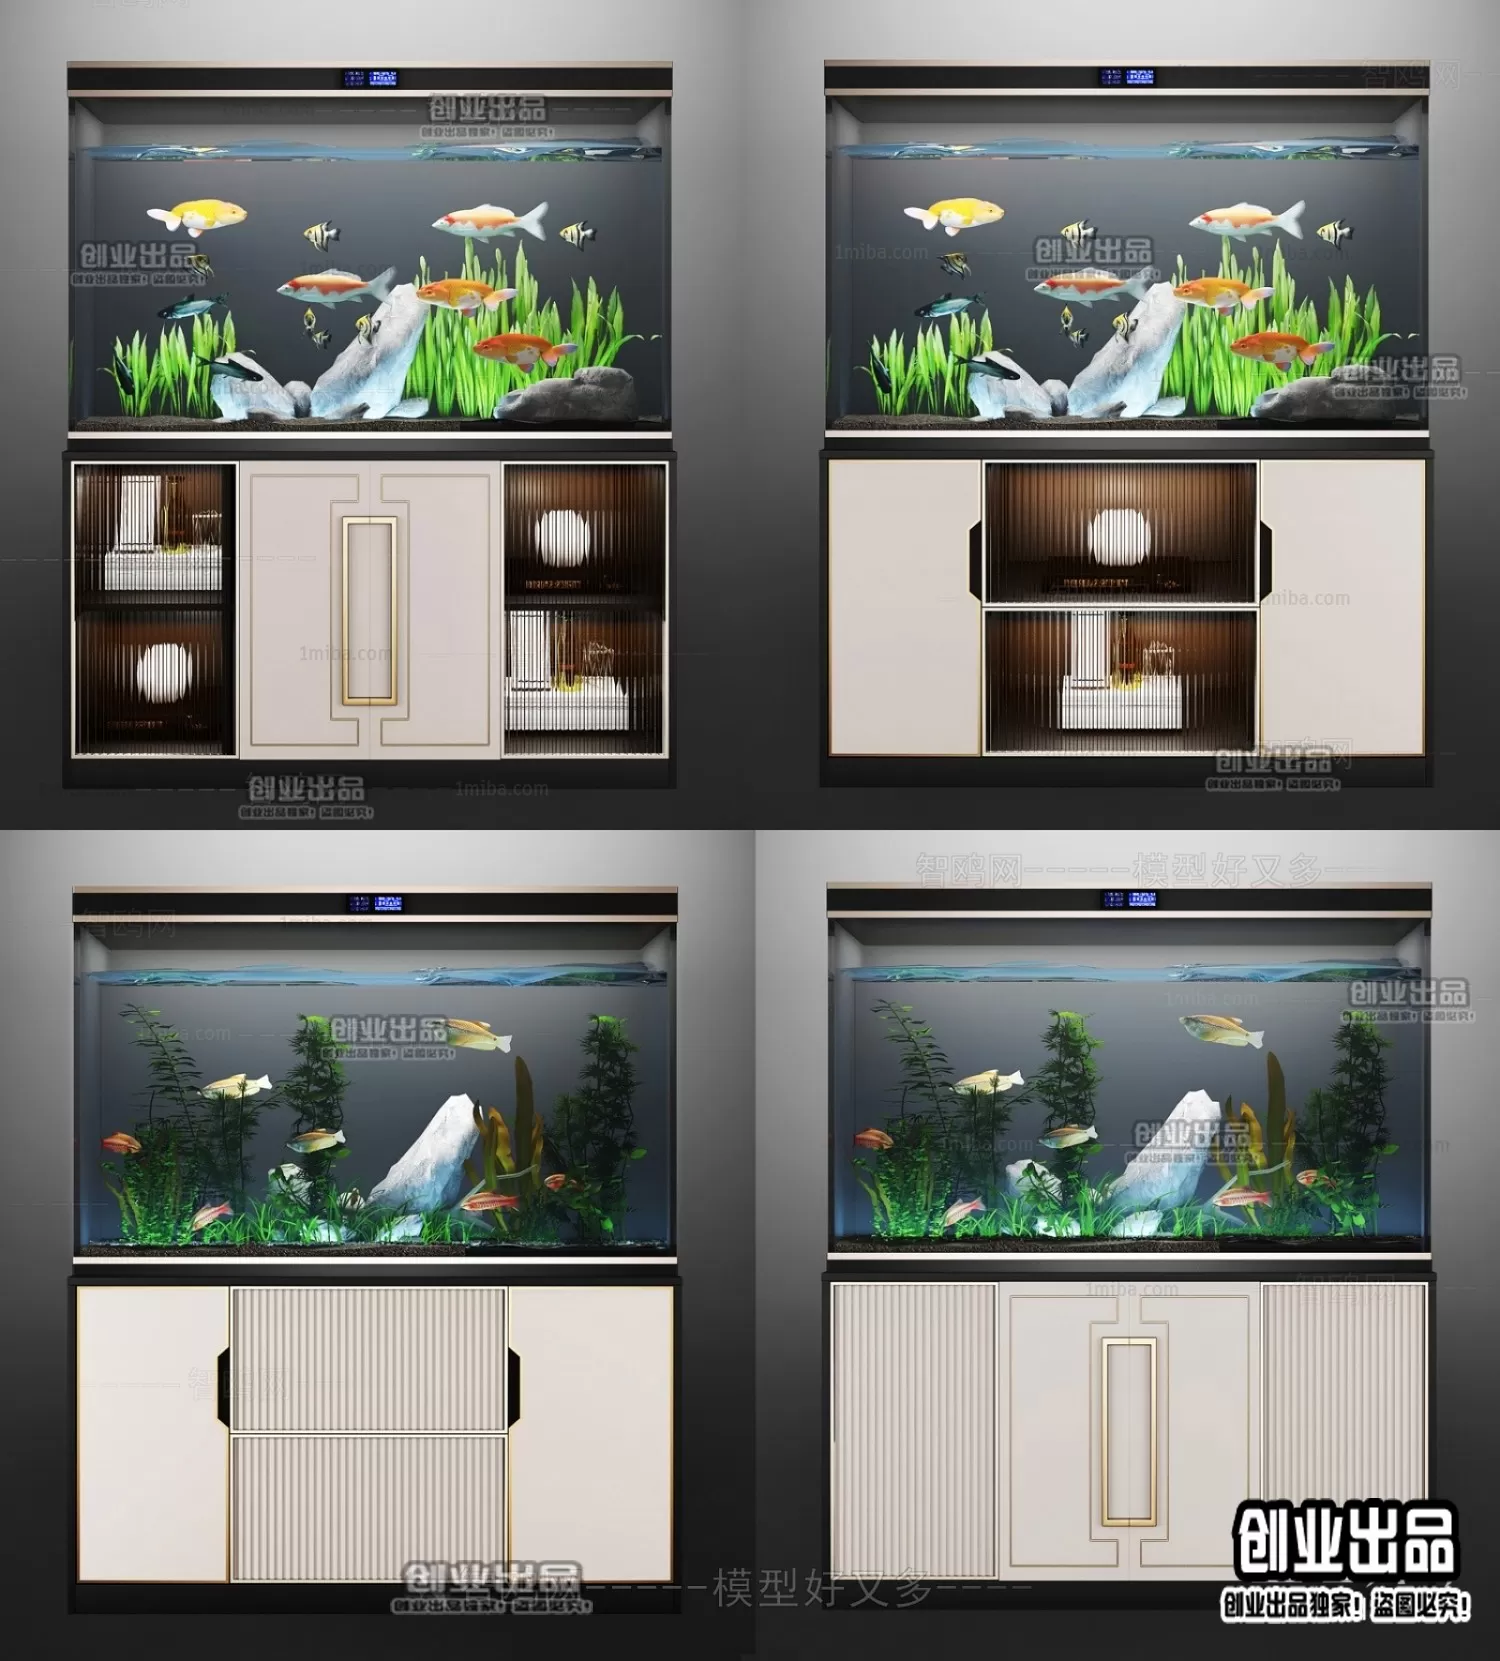 FISH TANK – 15 – FURNITURE 3D MODELS 2022 (VRAY)